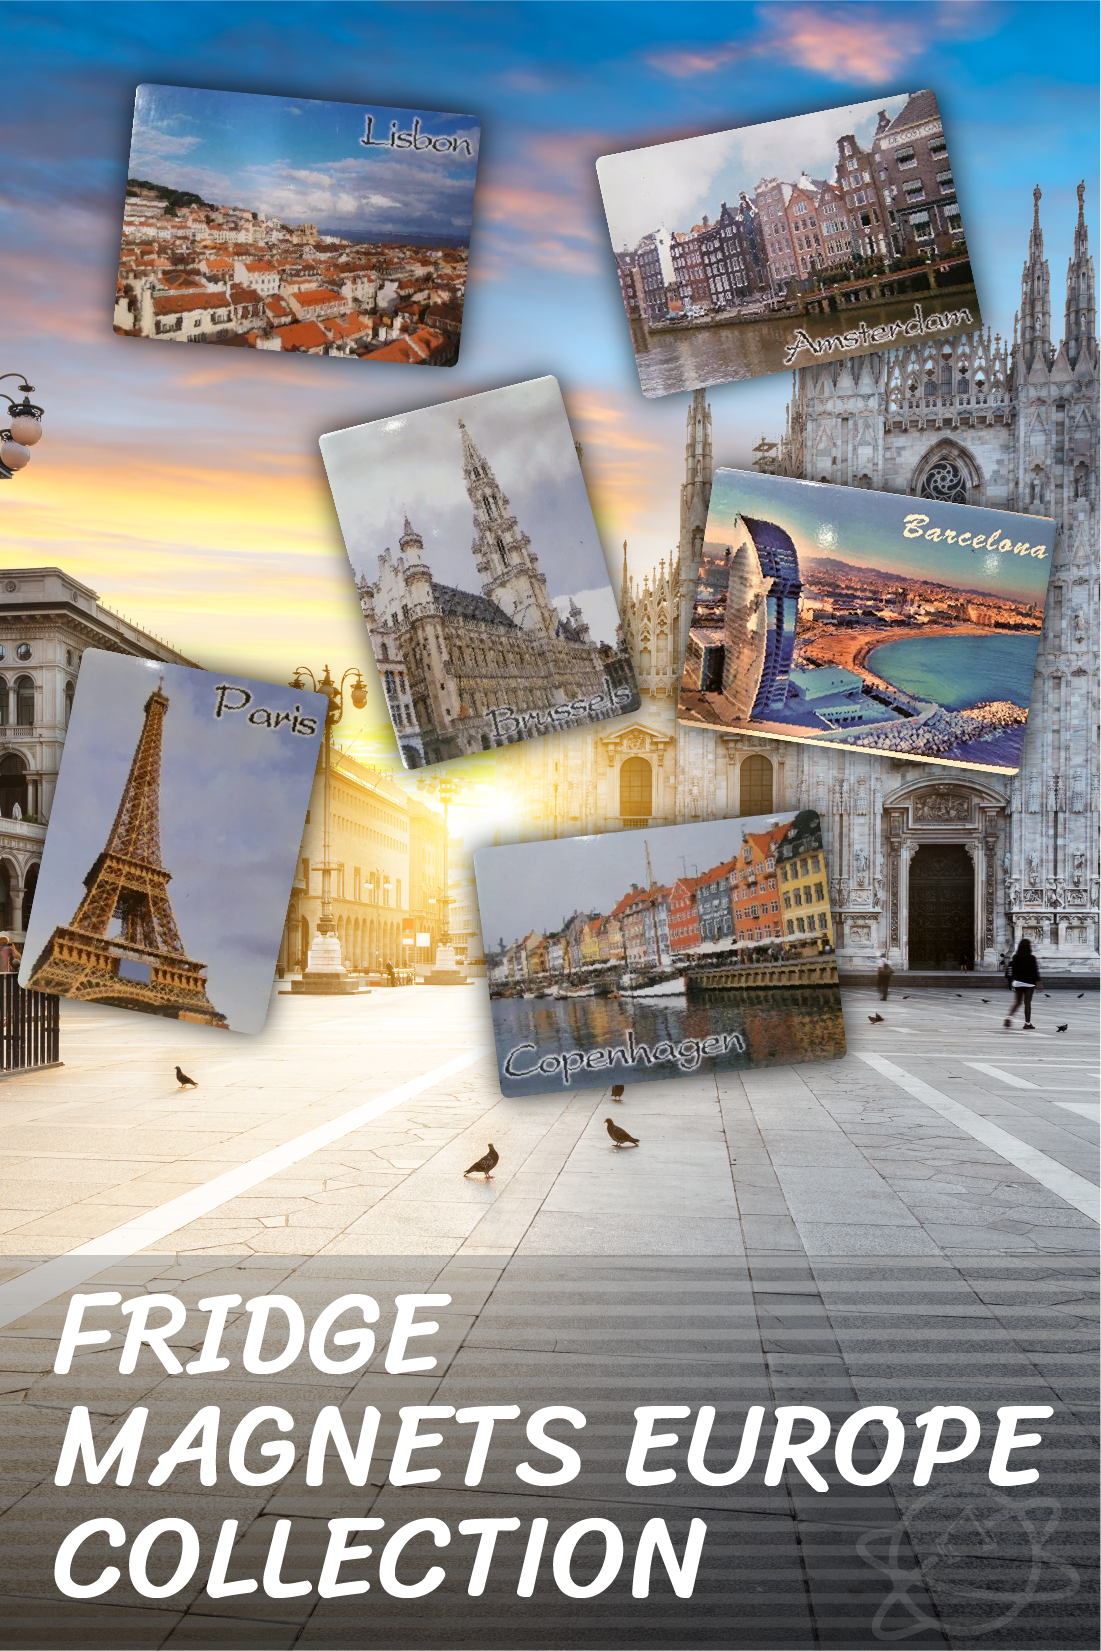 Fridge magnets Europe